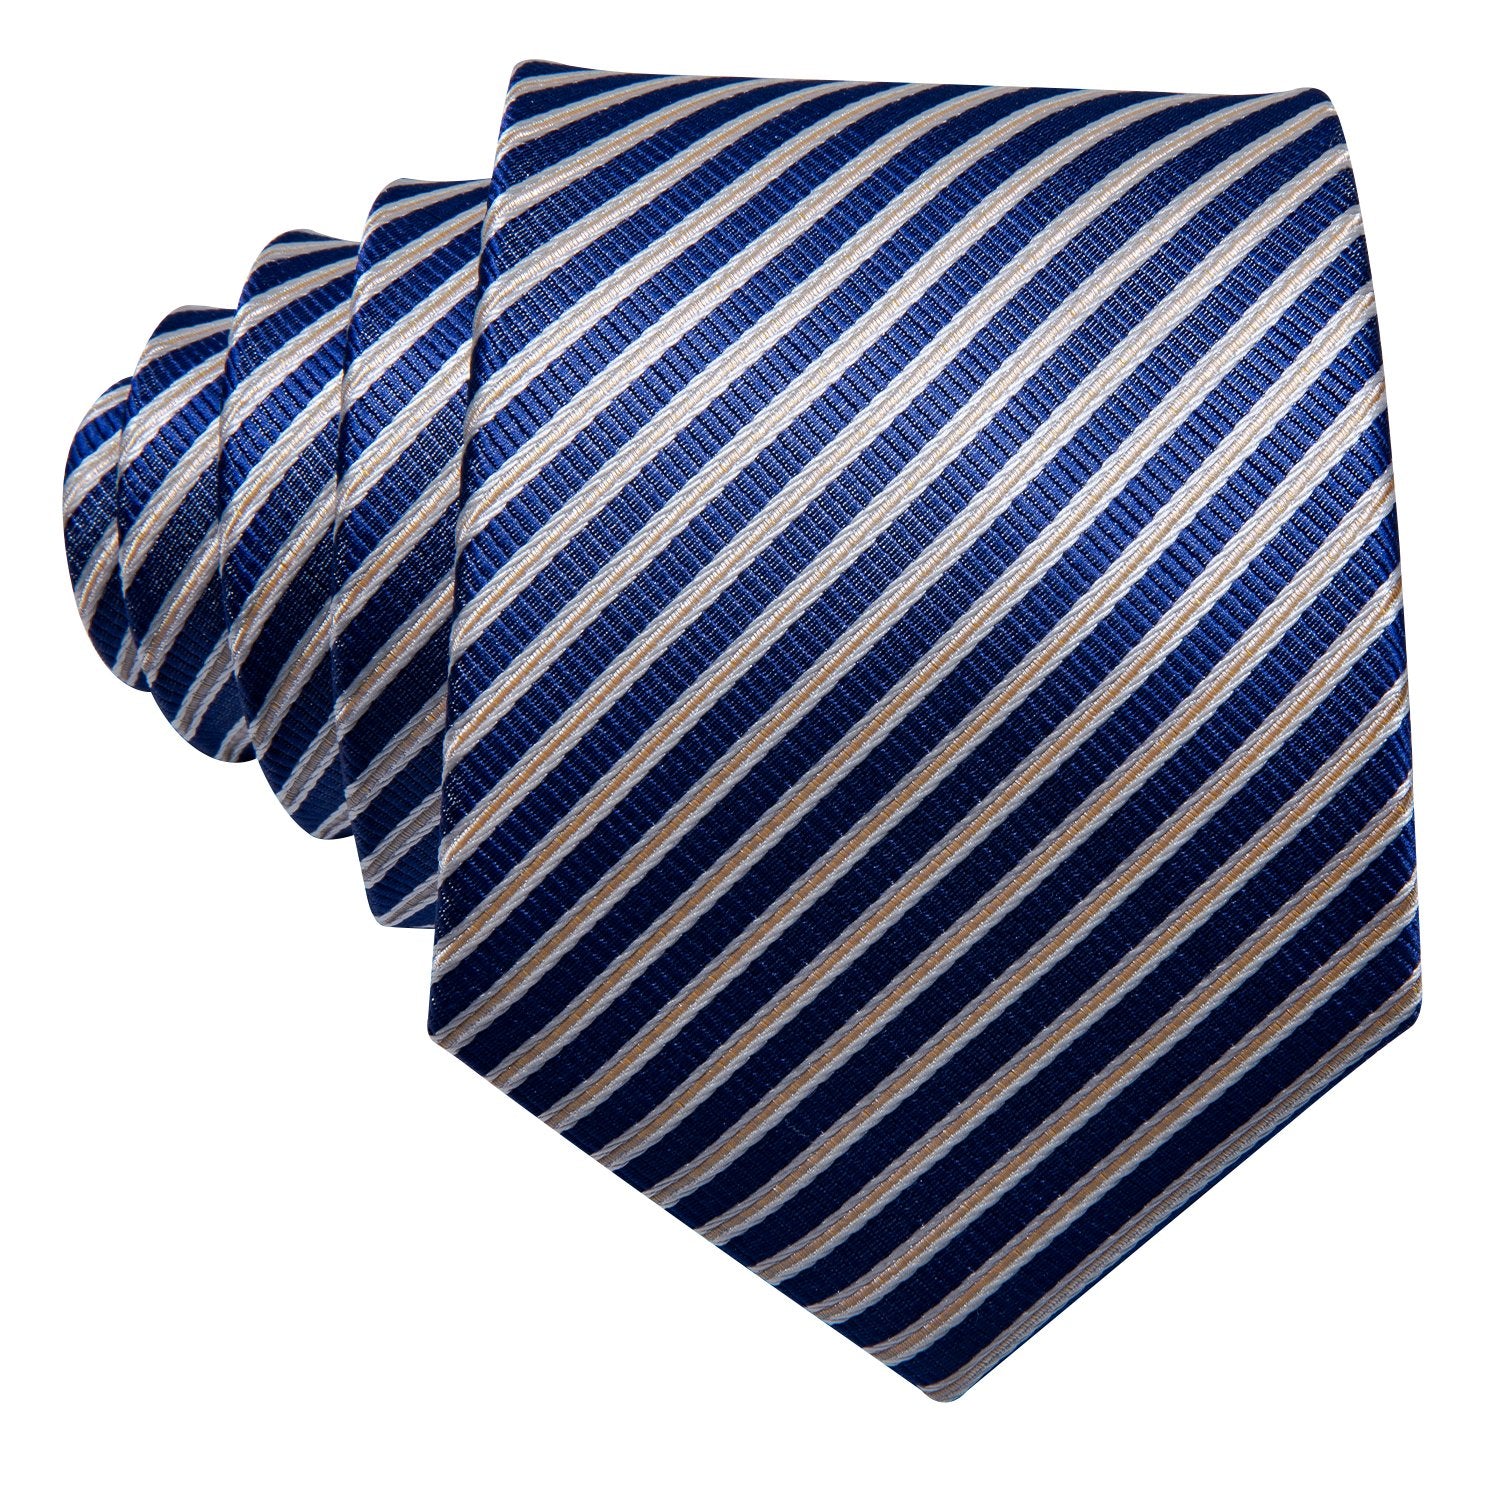 Blue Narrow Striped Silk Fabric Tie Hanky Cufflinks Set - barry-wang